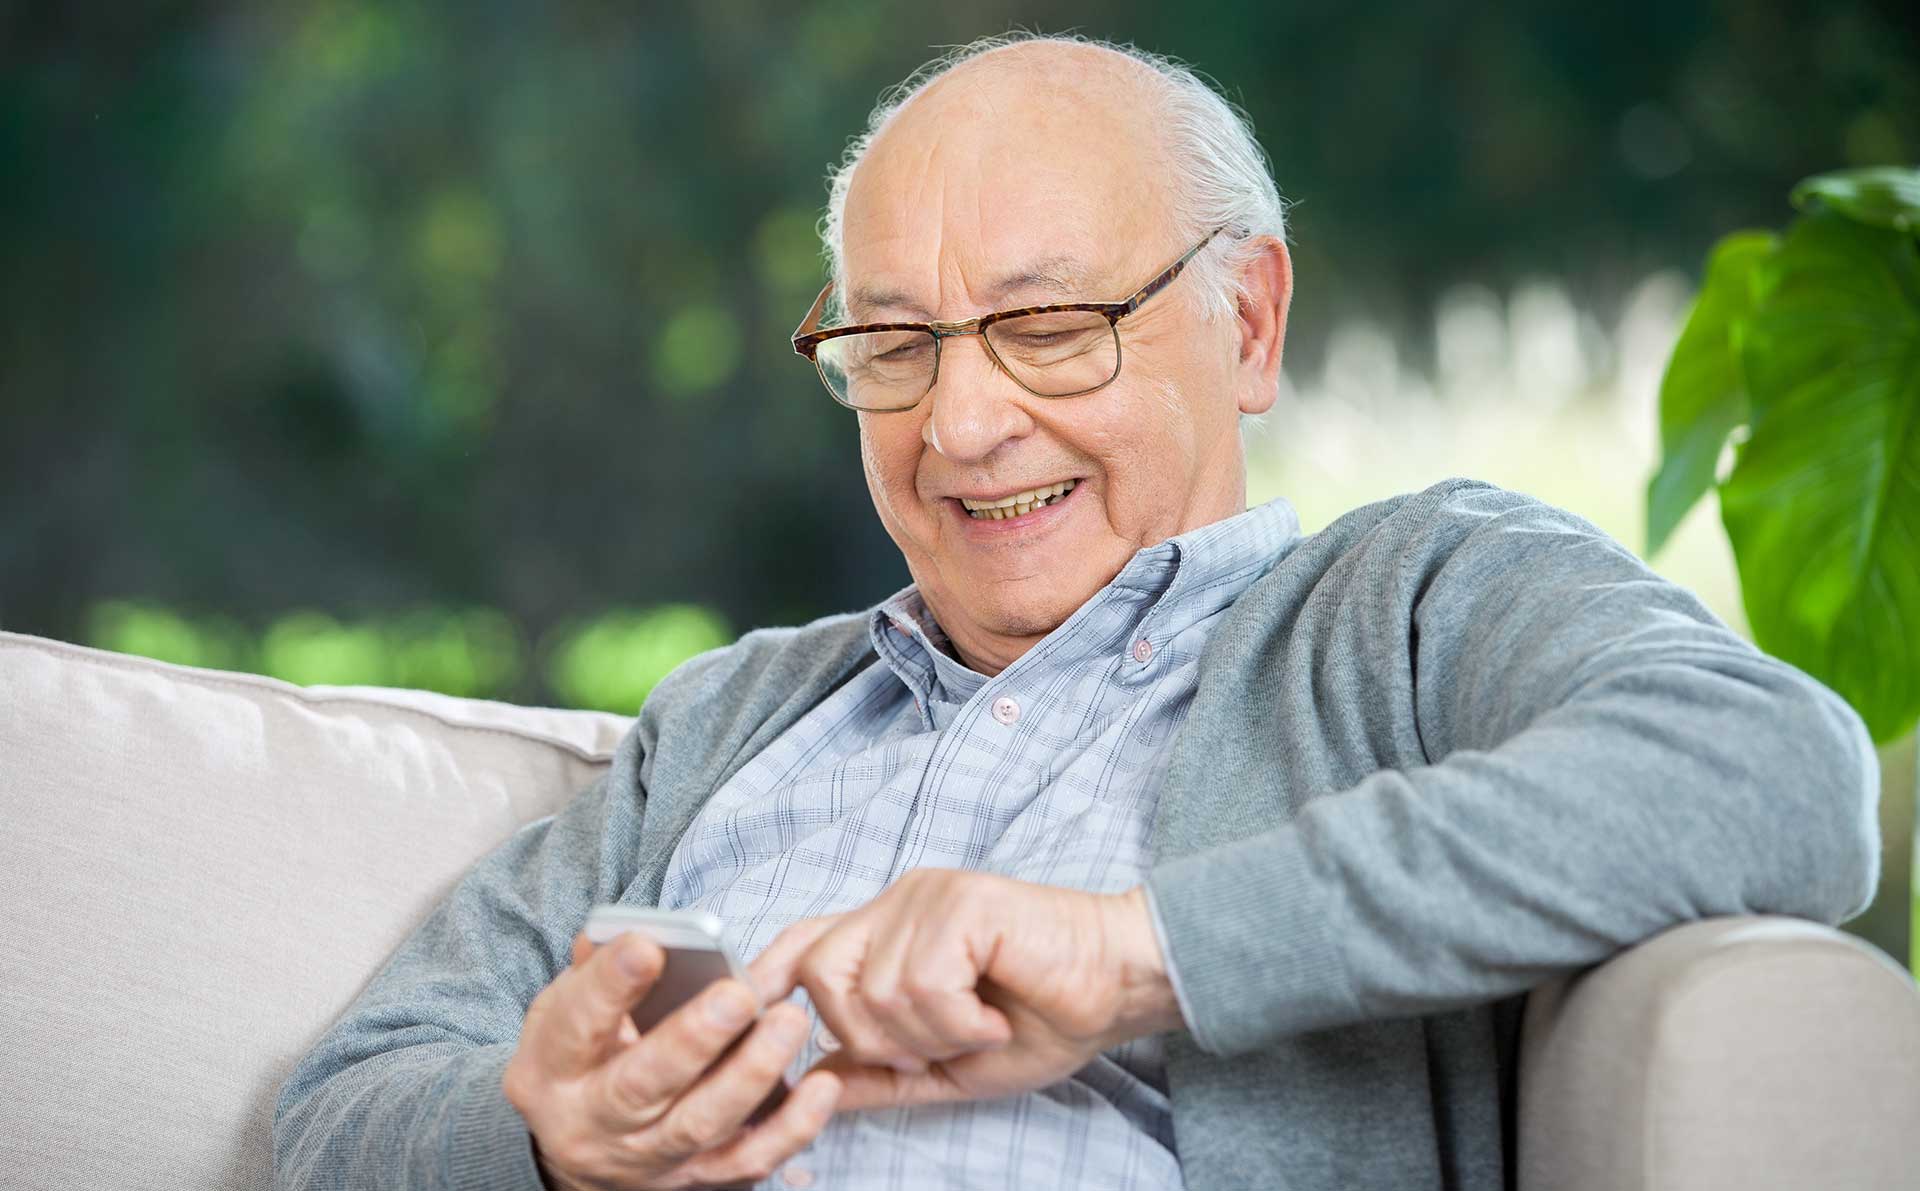 Elderly male using technology